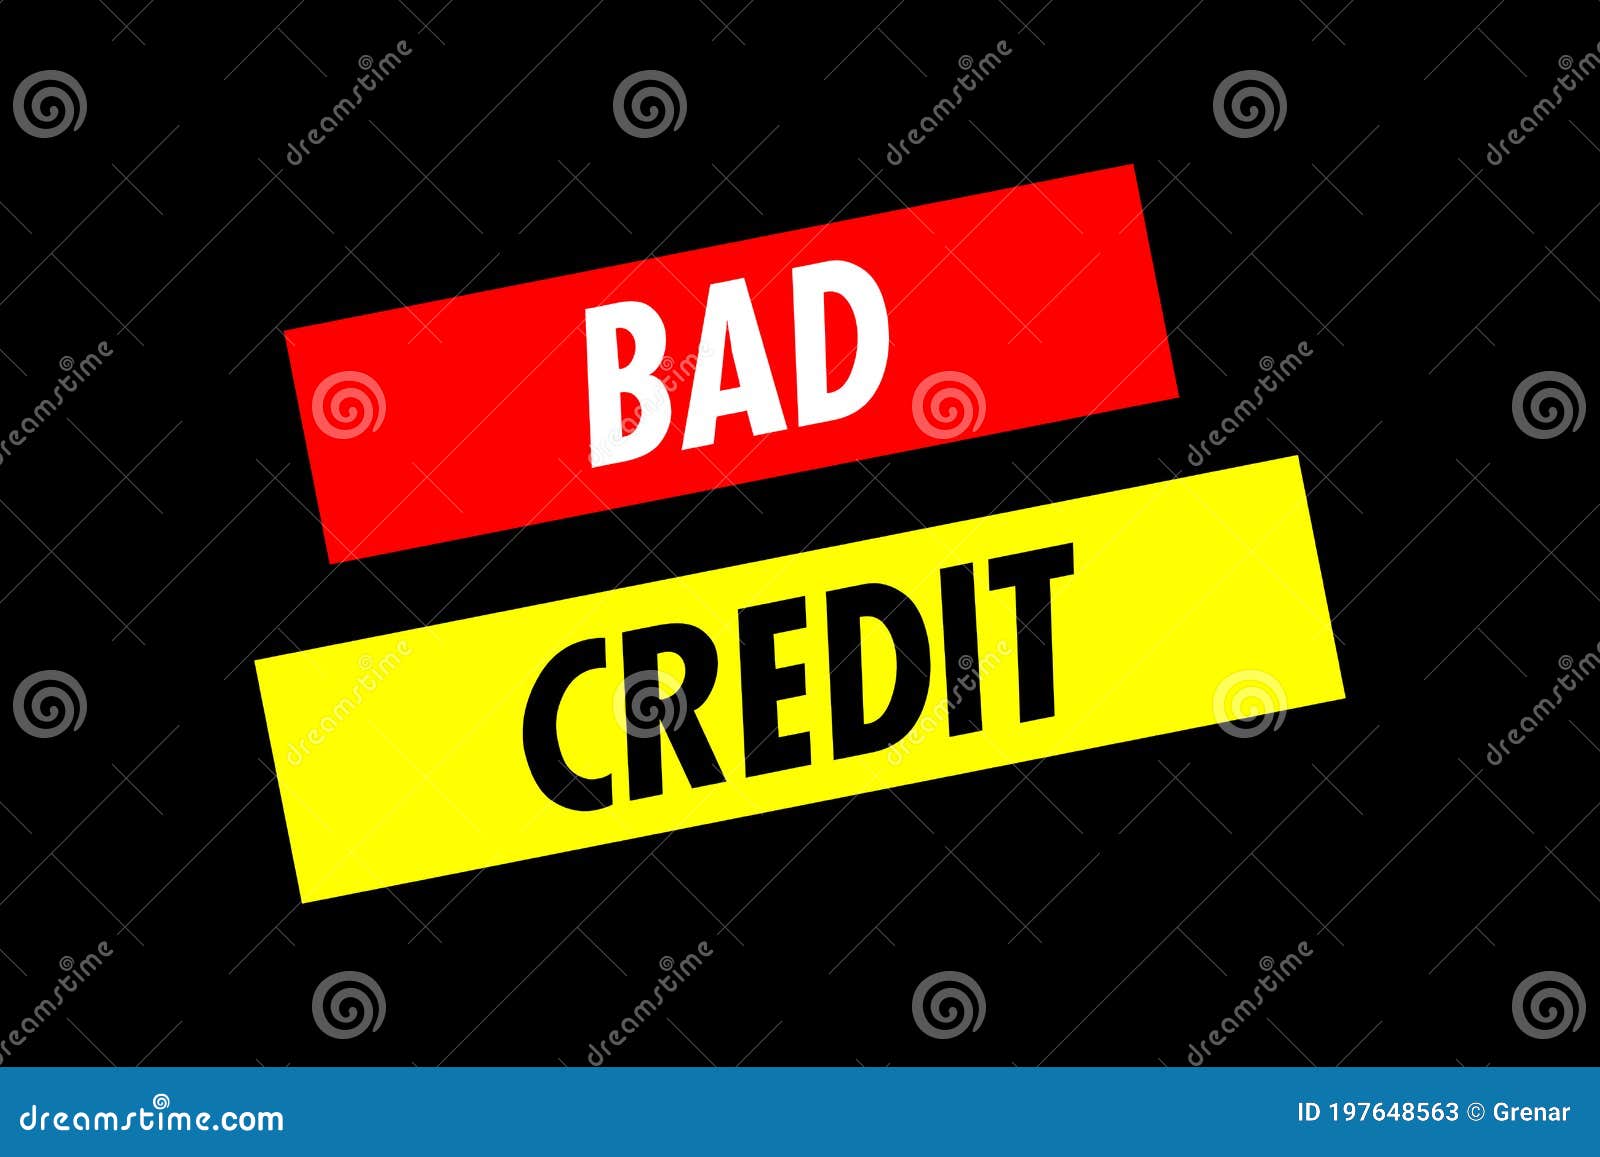 futura bad credit